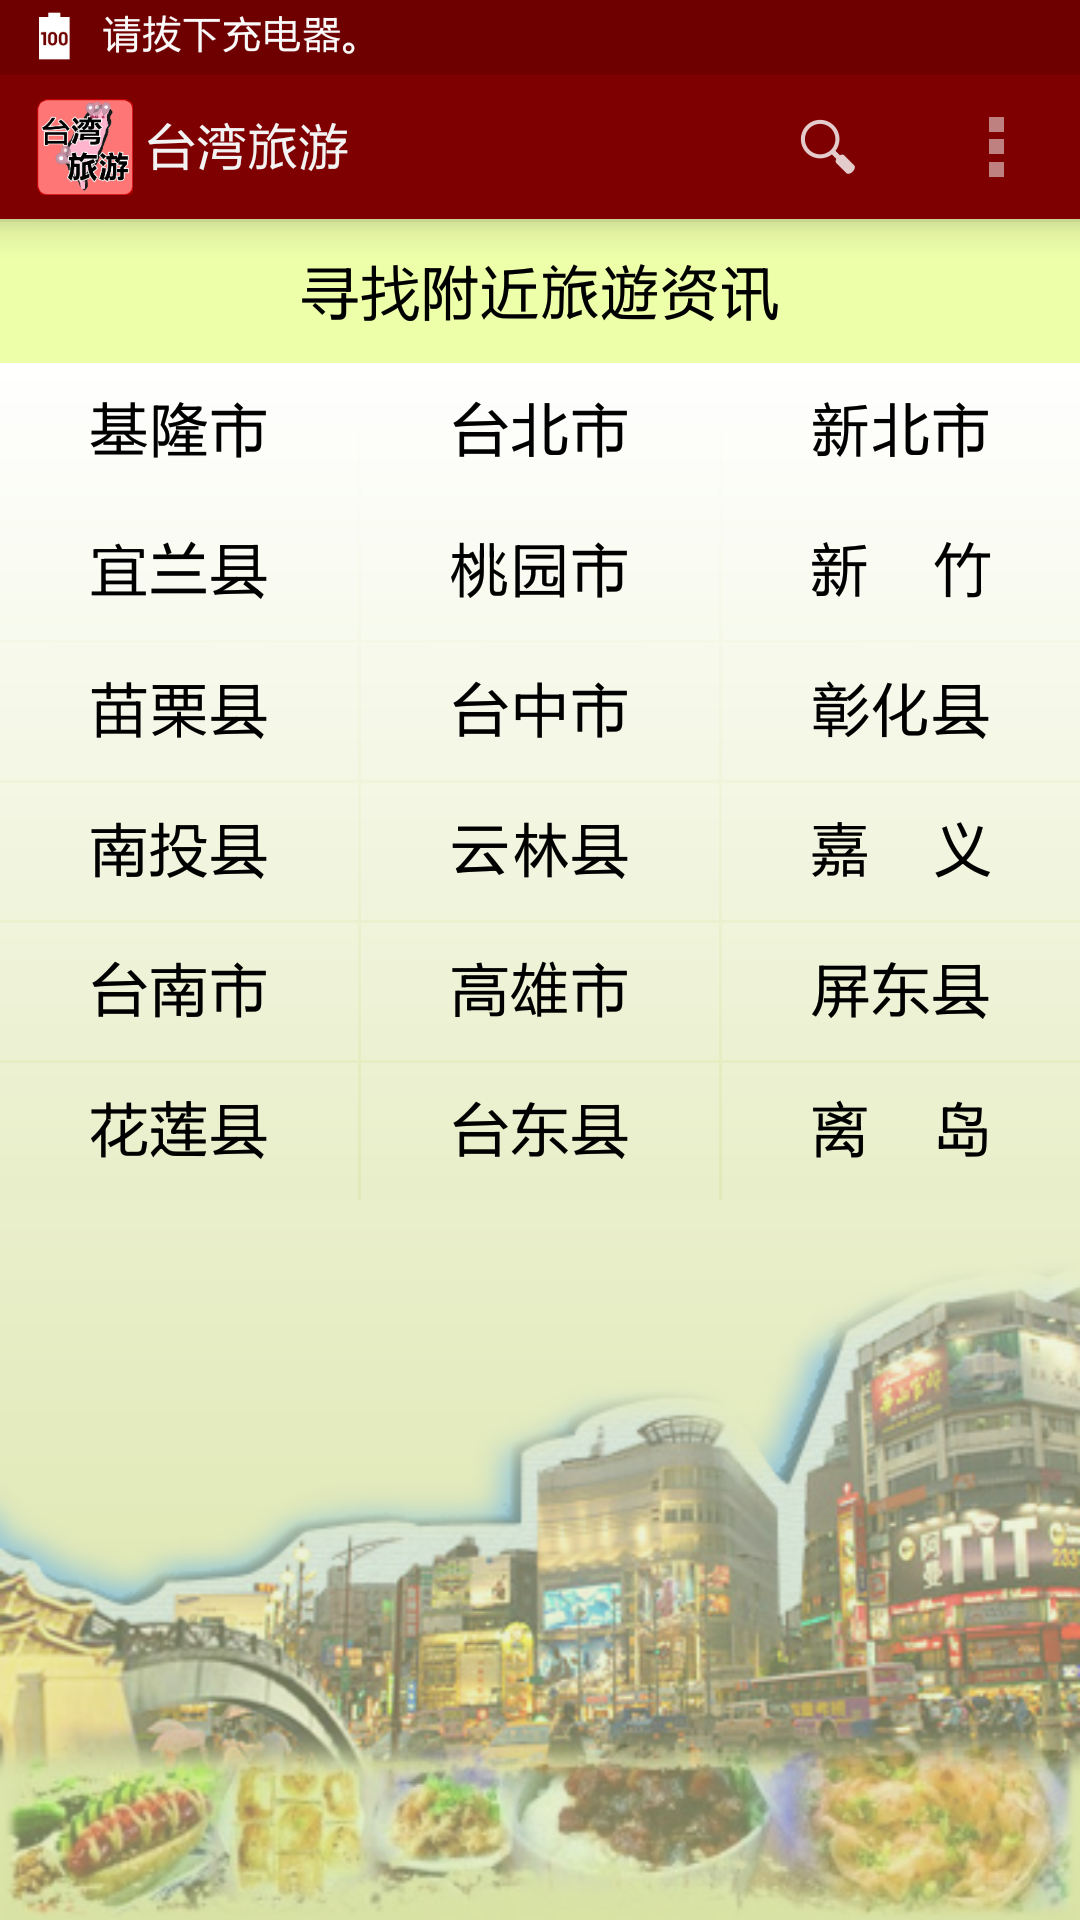 Android application 台灣旅遊景點,民宿,美食推薦 screenshort